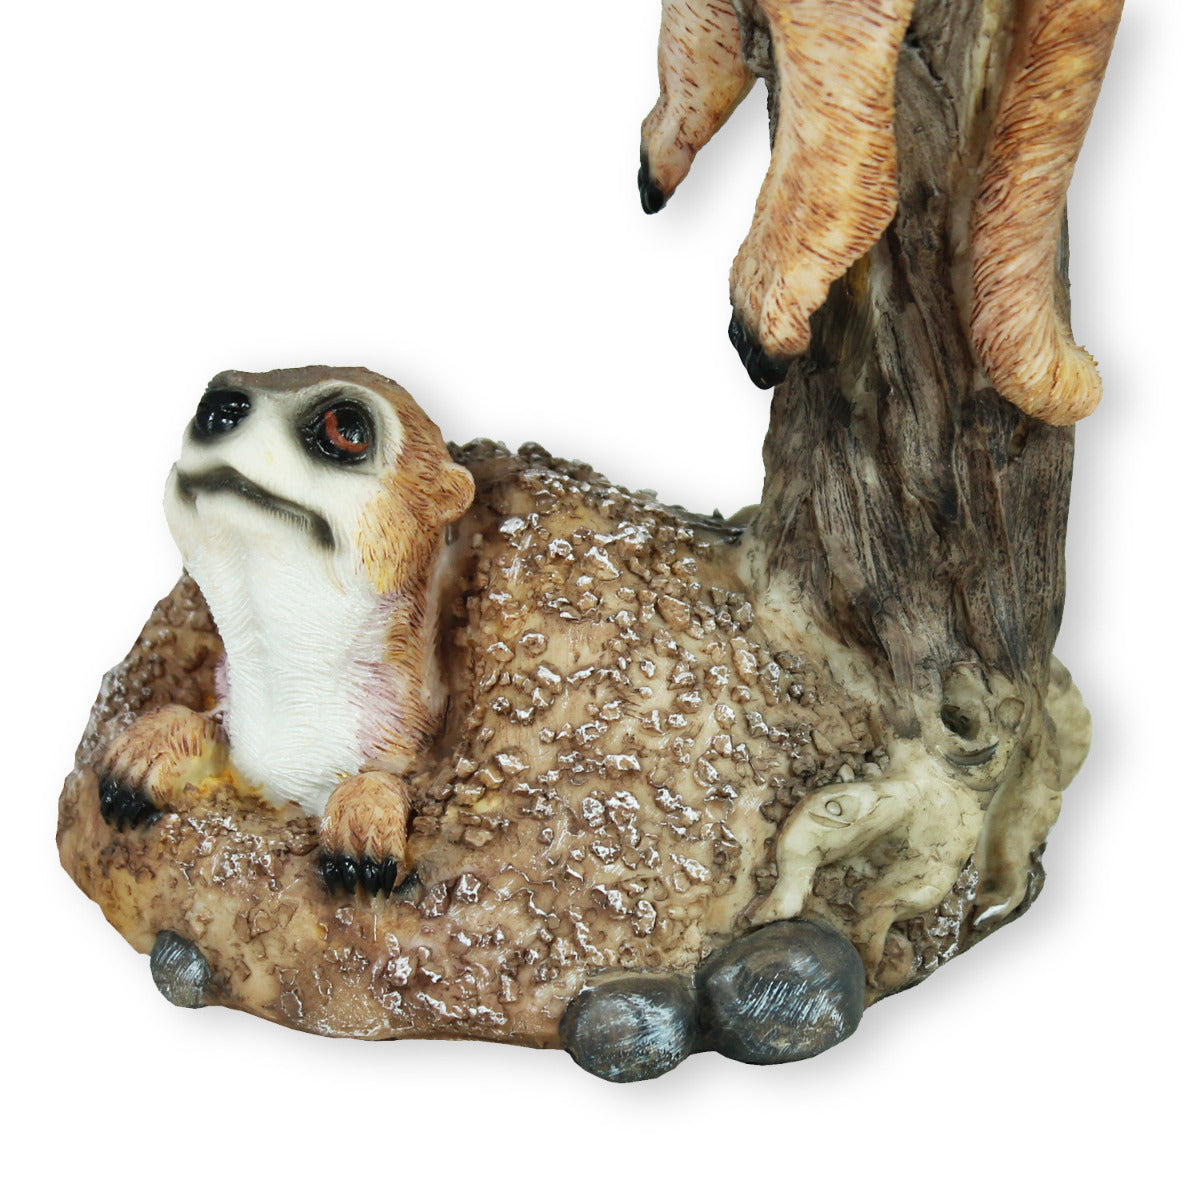 Erdmännchen Figur chillend Erdmännchen Gartenfigur Frettchen Deko abhängende Erdmännchen